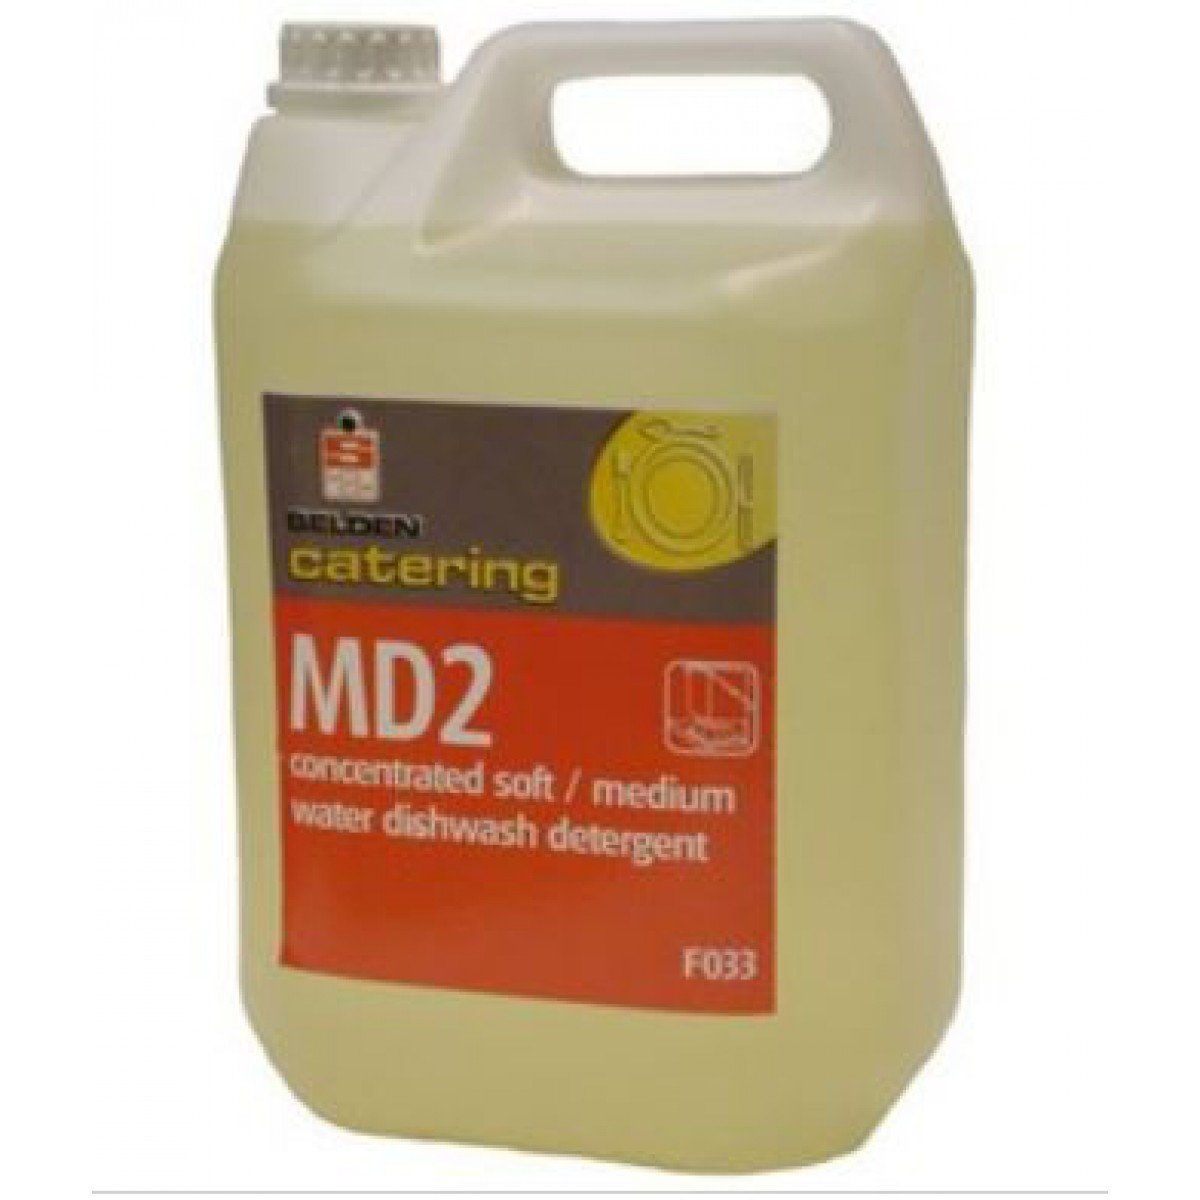 MD2 -Concentrated soft/medium dishwash detergent